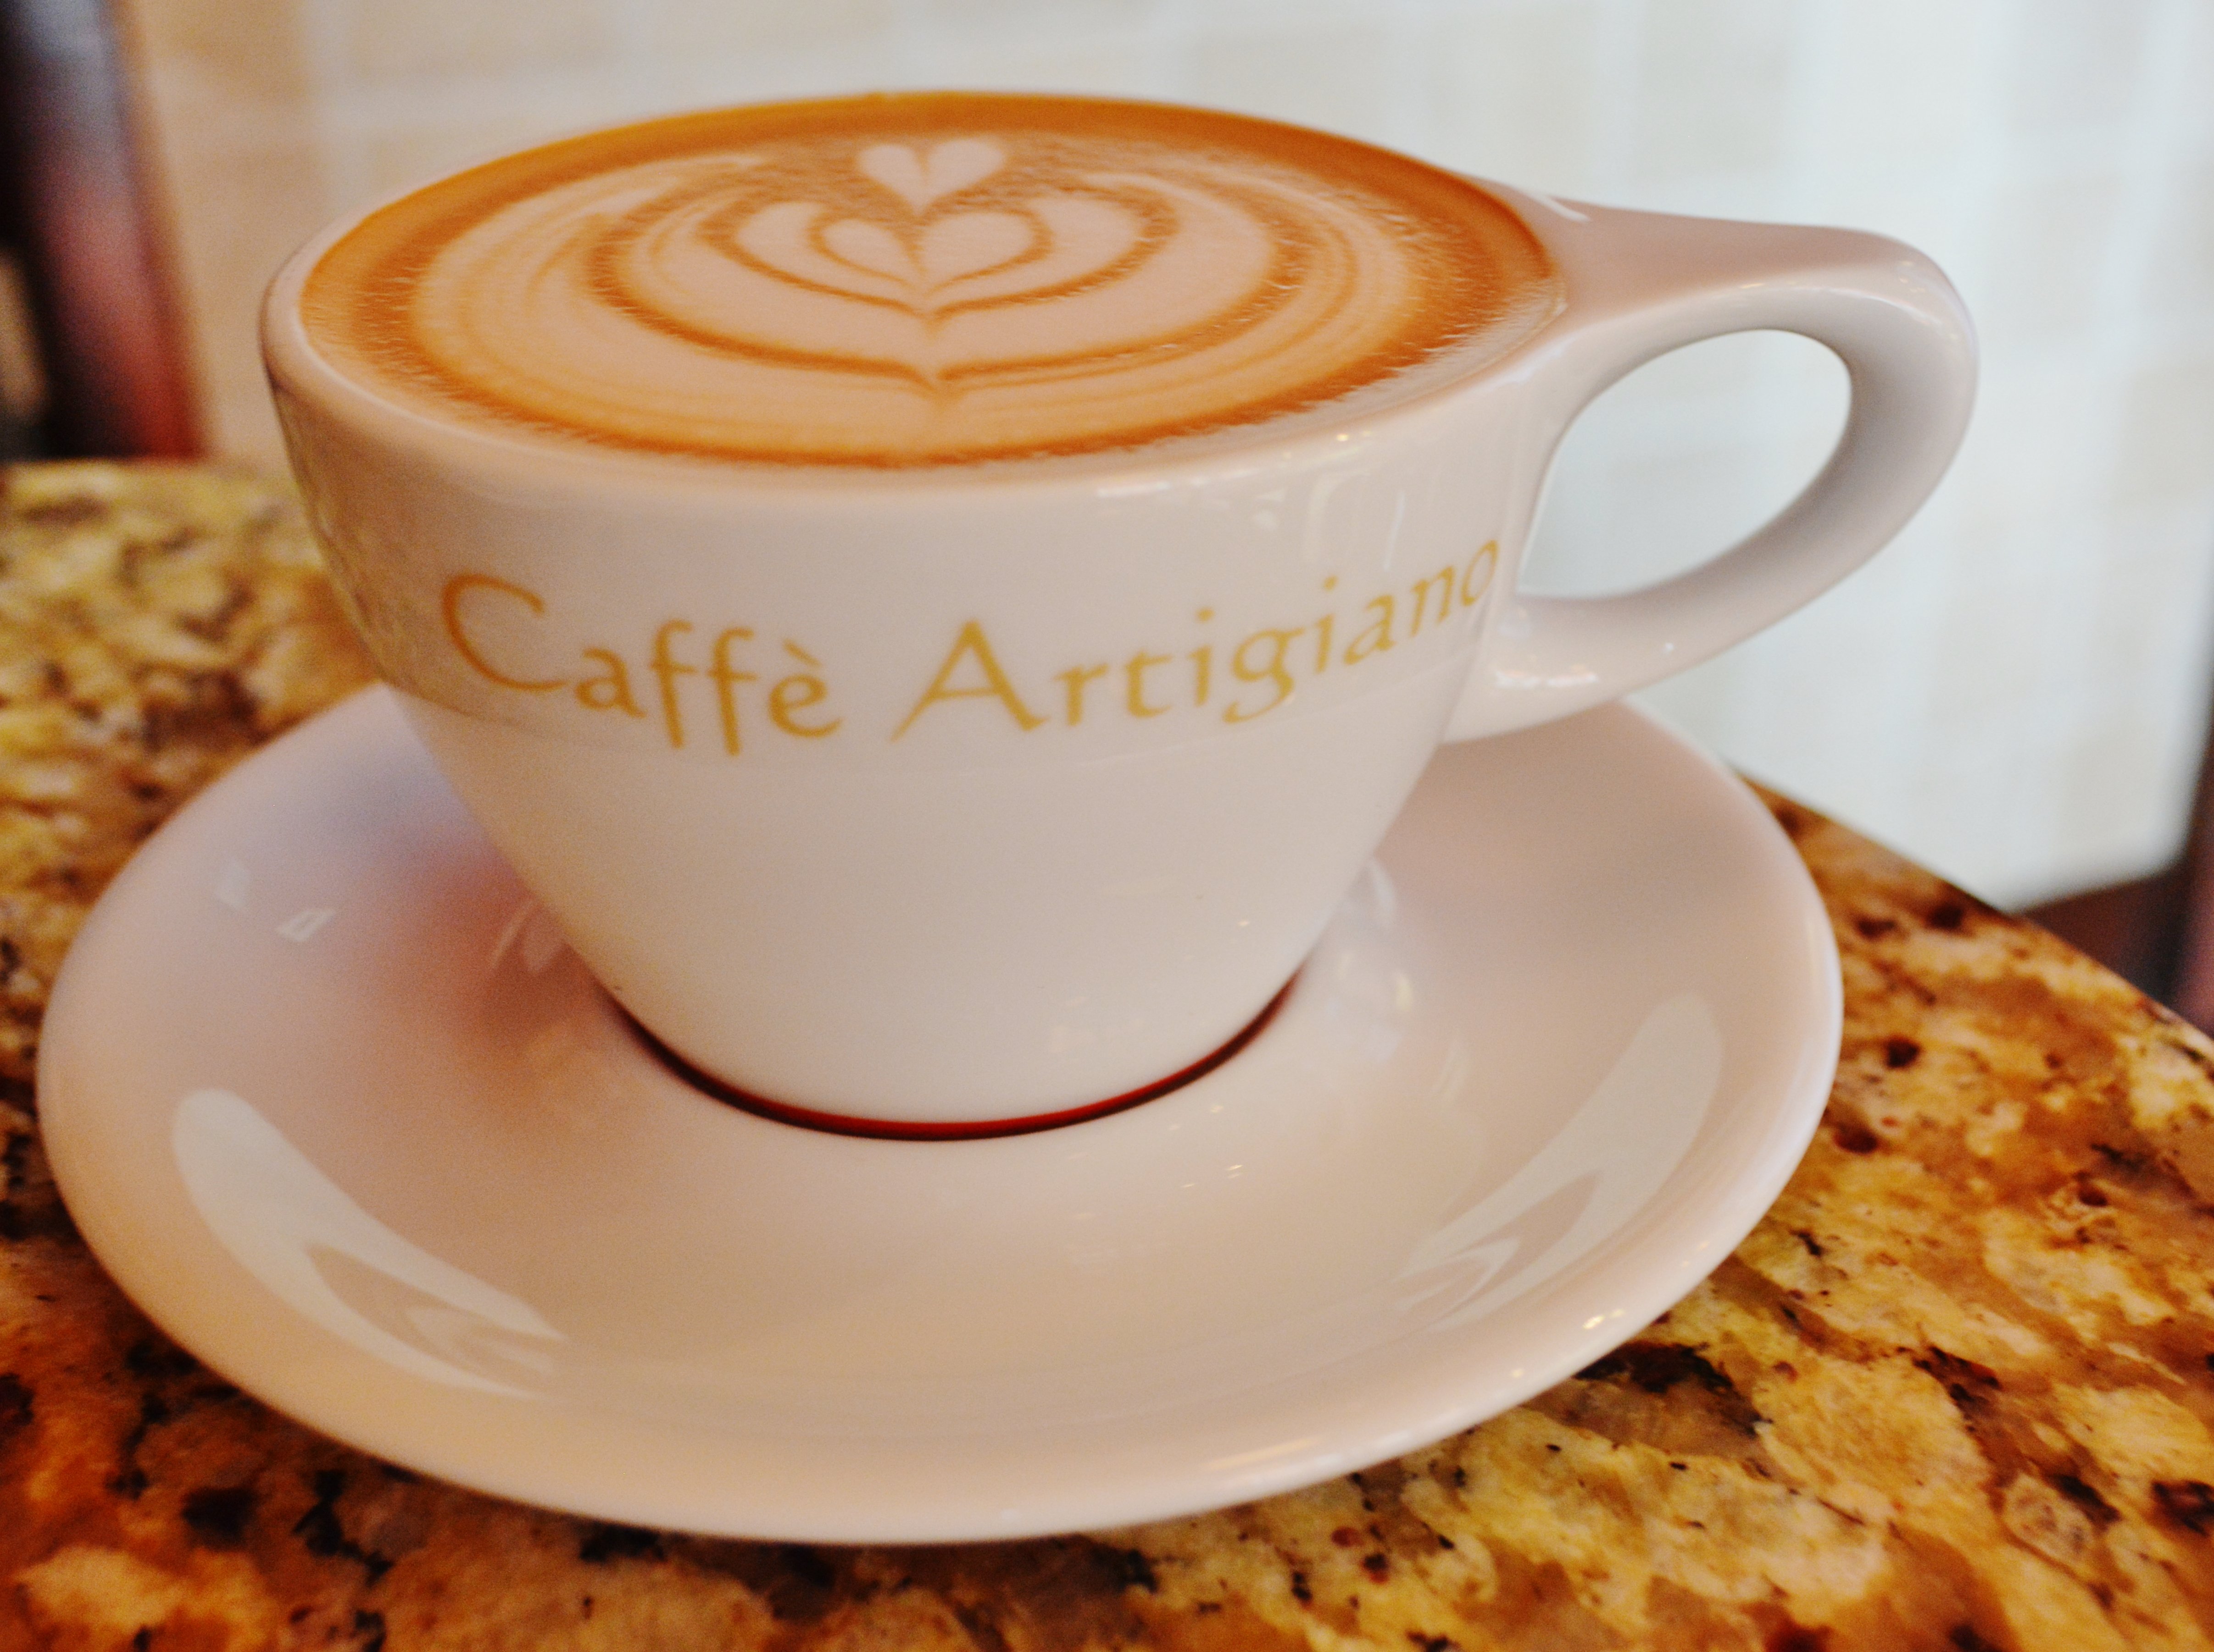 Spanish Latte at Caffè Artigiano- Vancouver